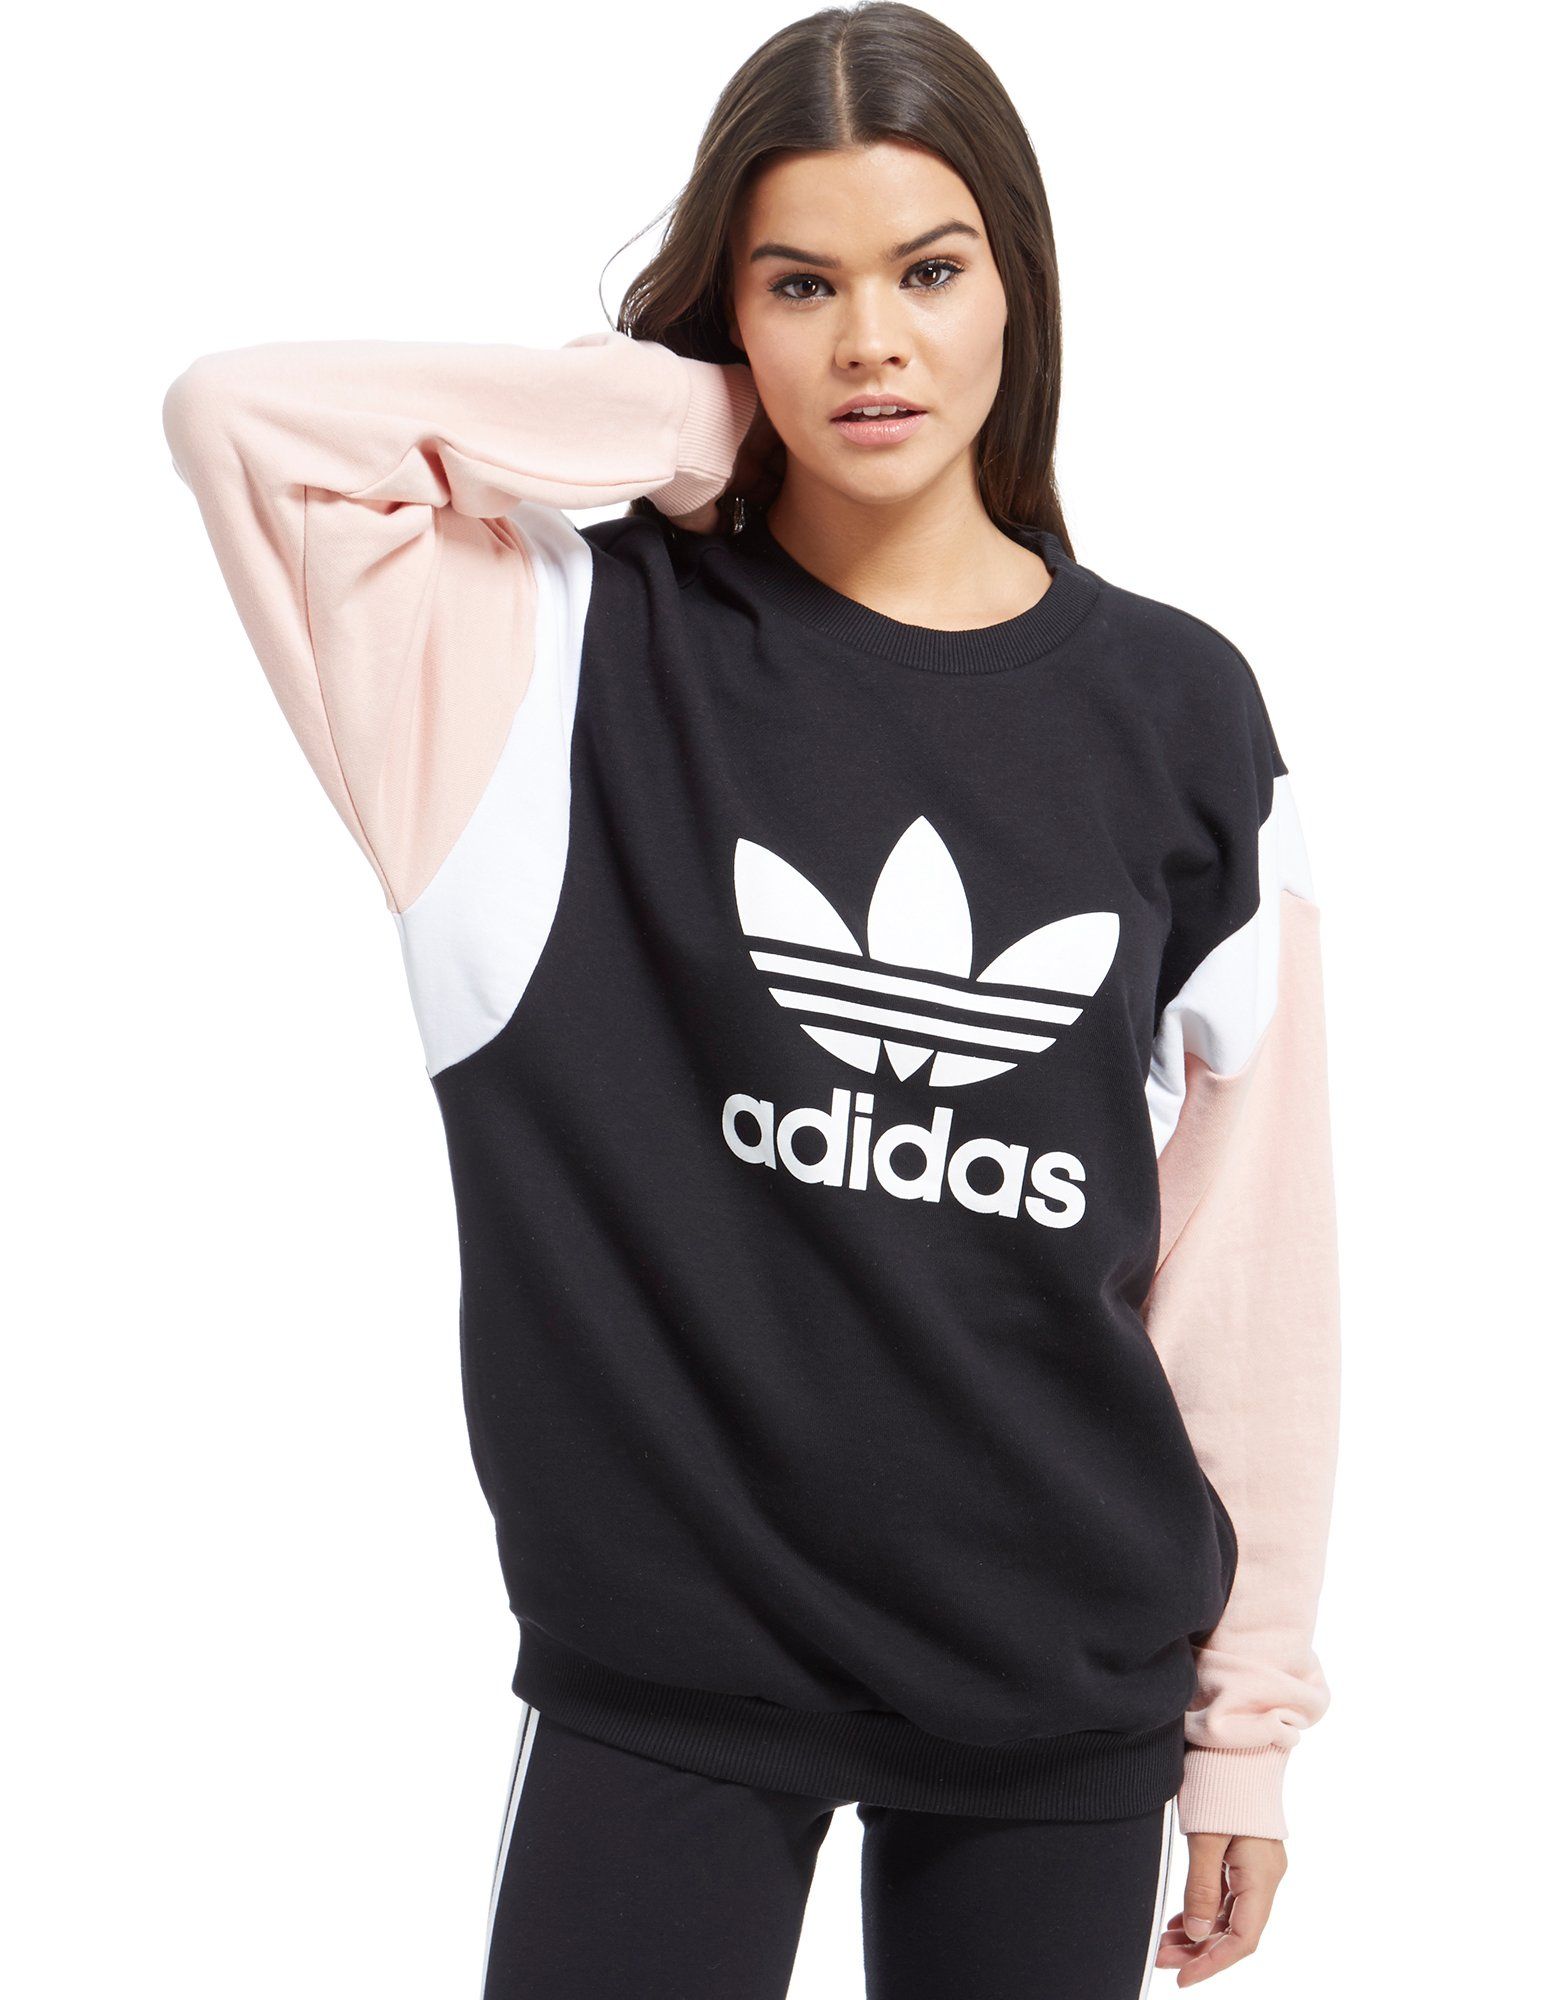 Adidas T Shirt Womens Jd | RLDM